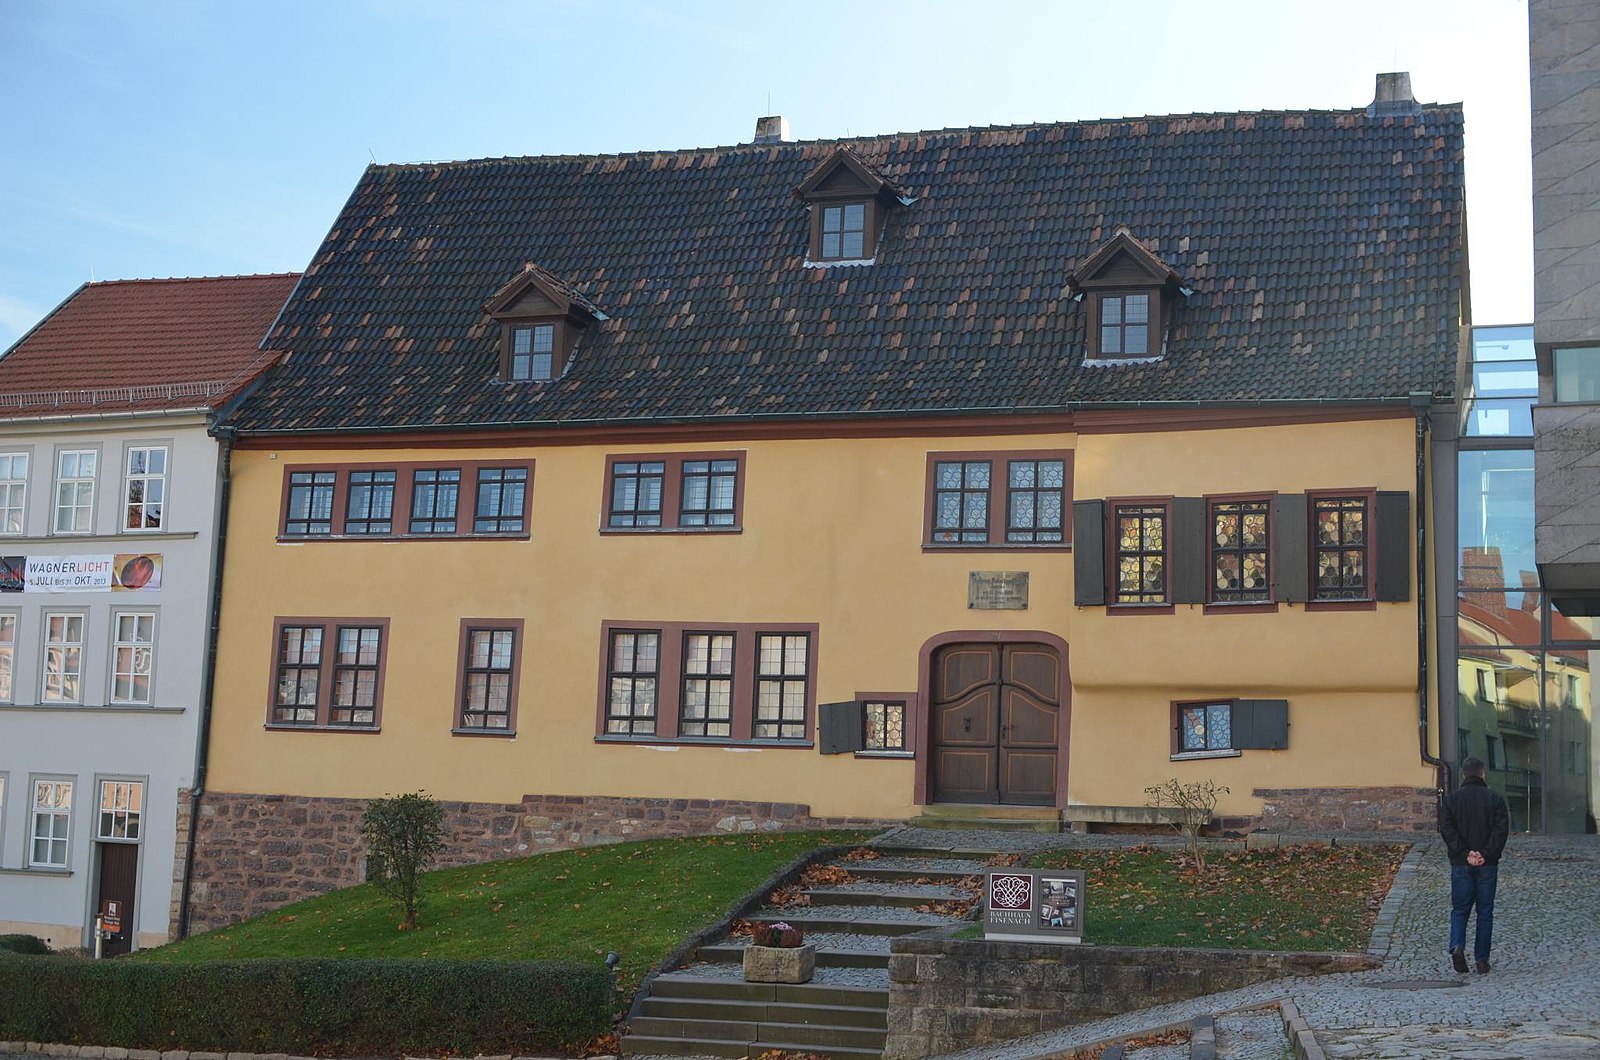 File:Bachhaus Eisenach - Flickr - tm-md (19).jpg - Wikimedia